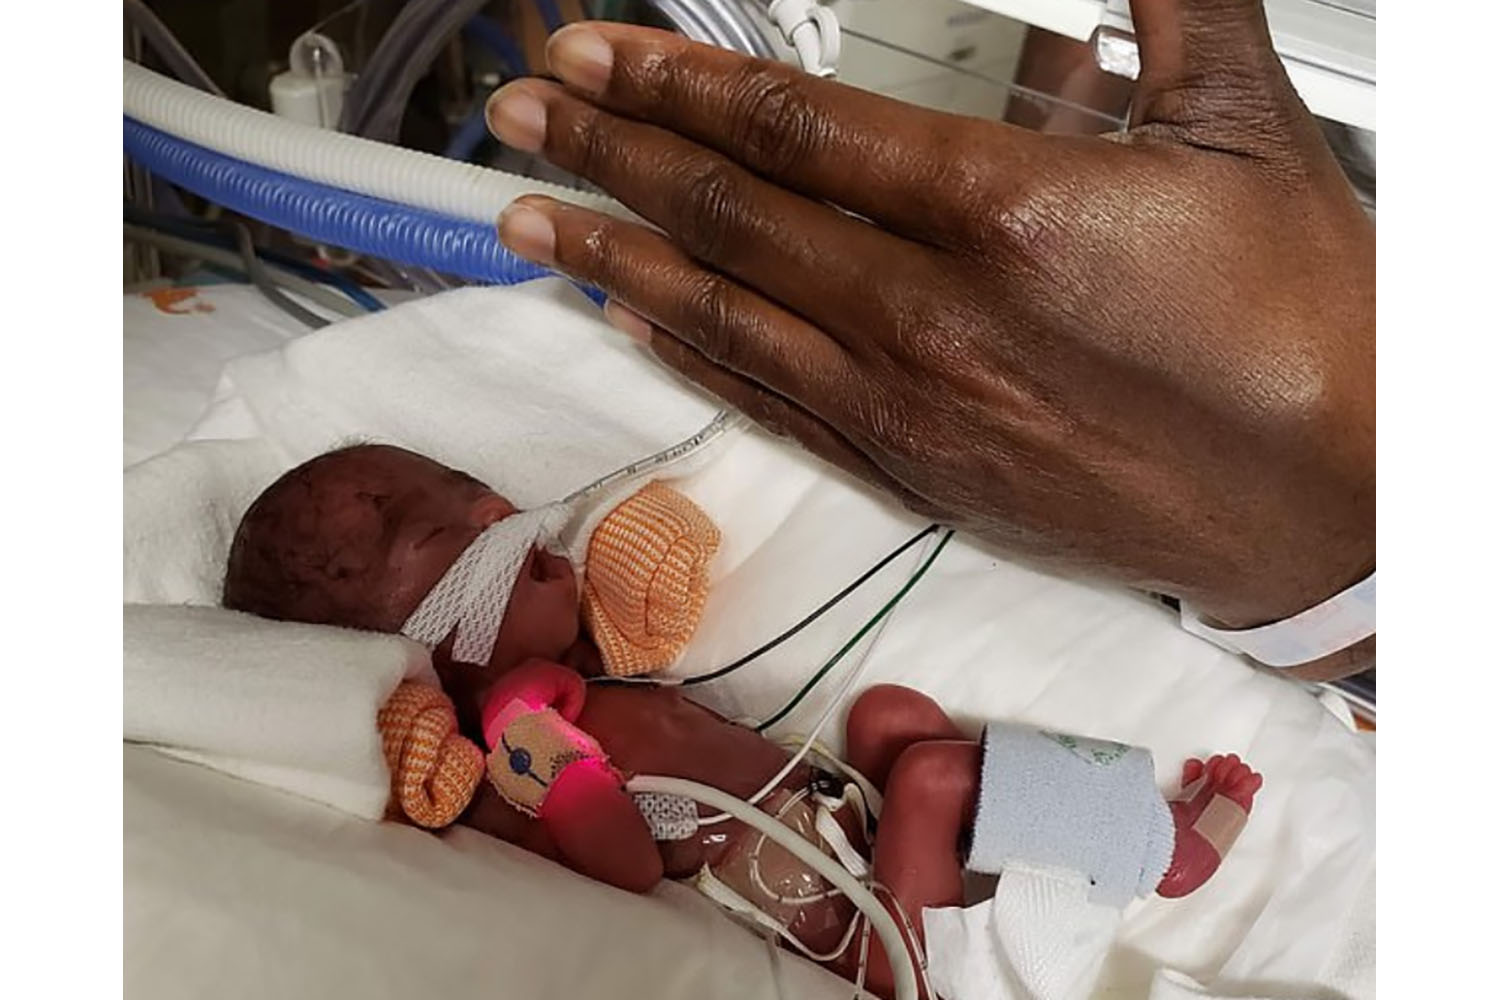 DISRN Baby born 16 weeks premature goes home healthy